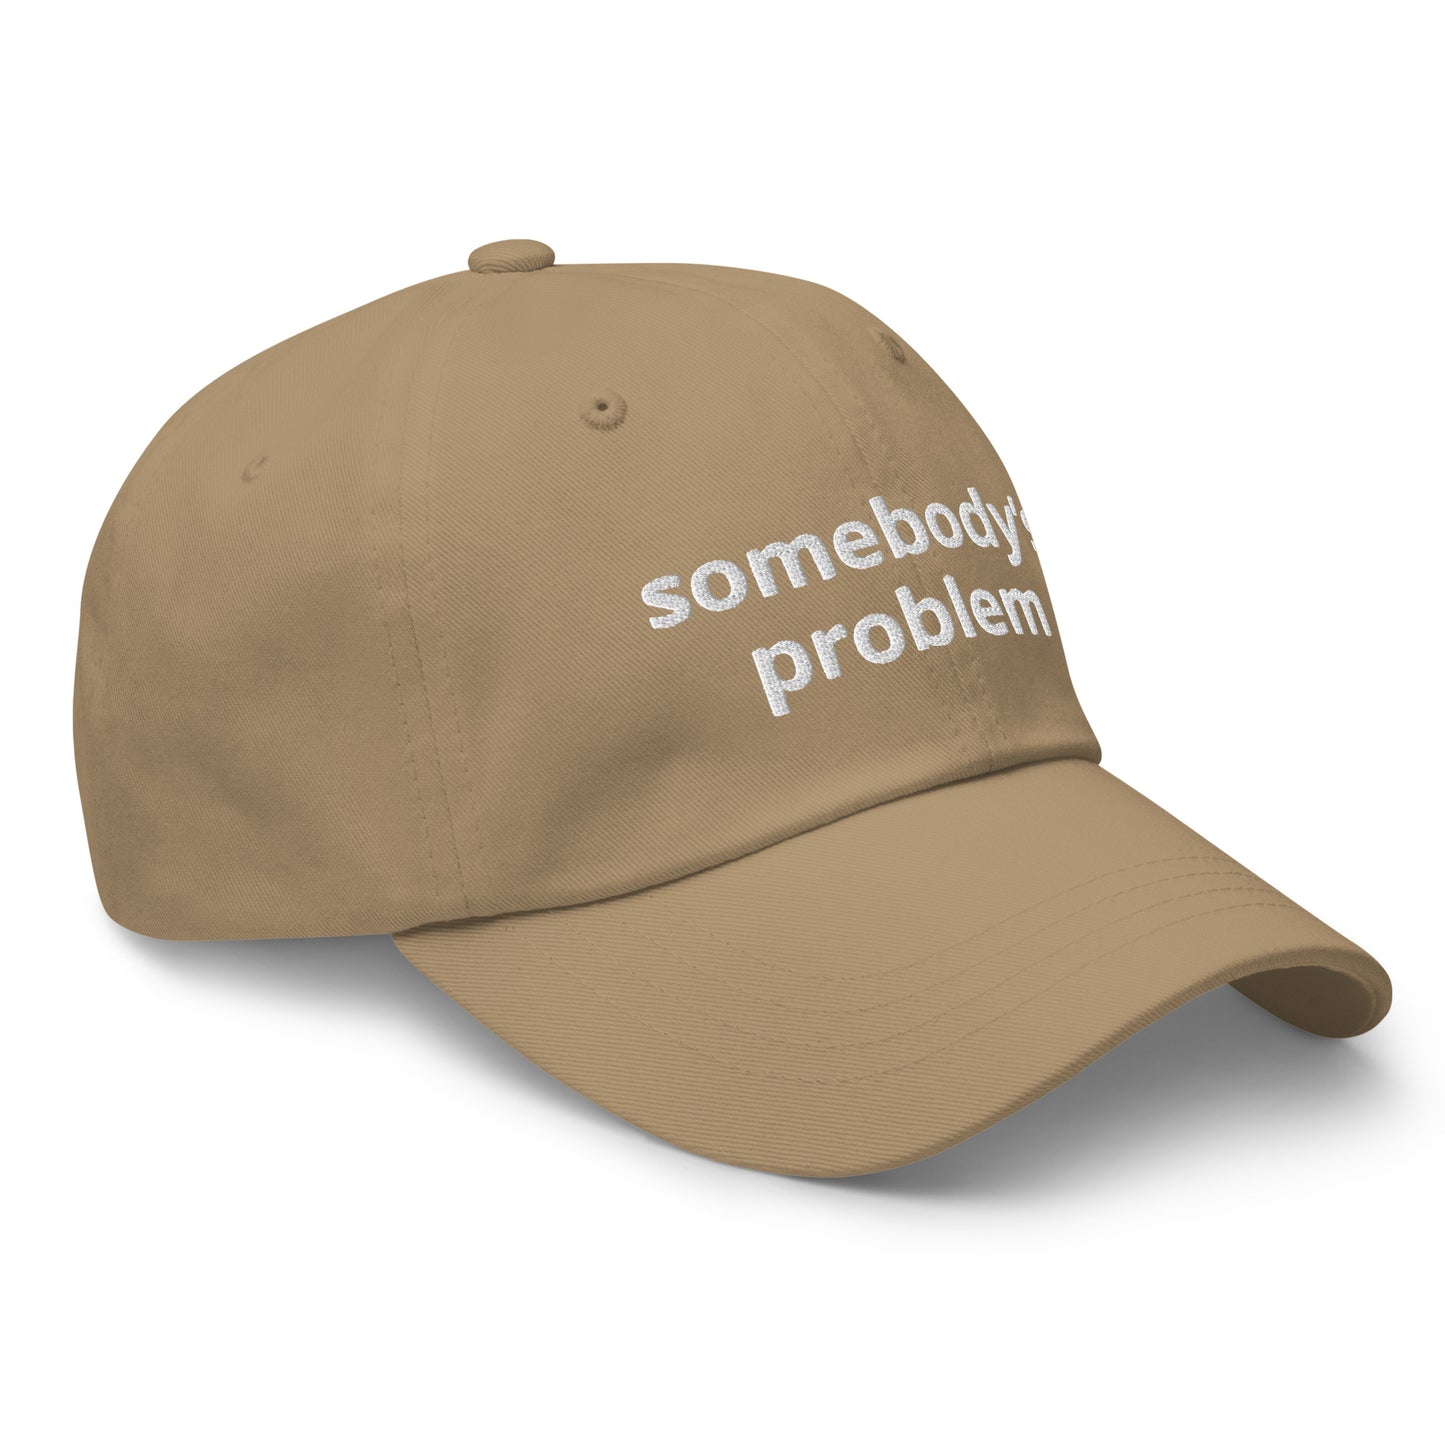 Somebody's problem dad hat